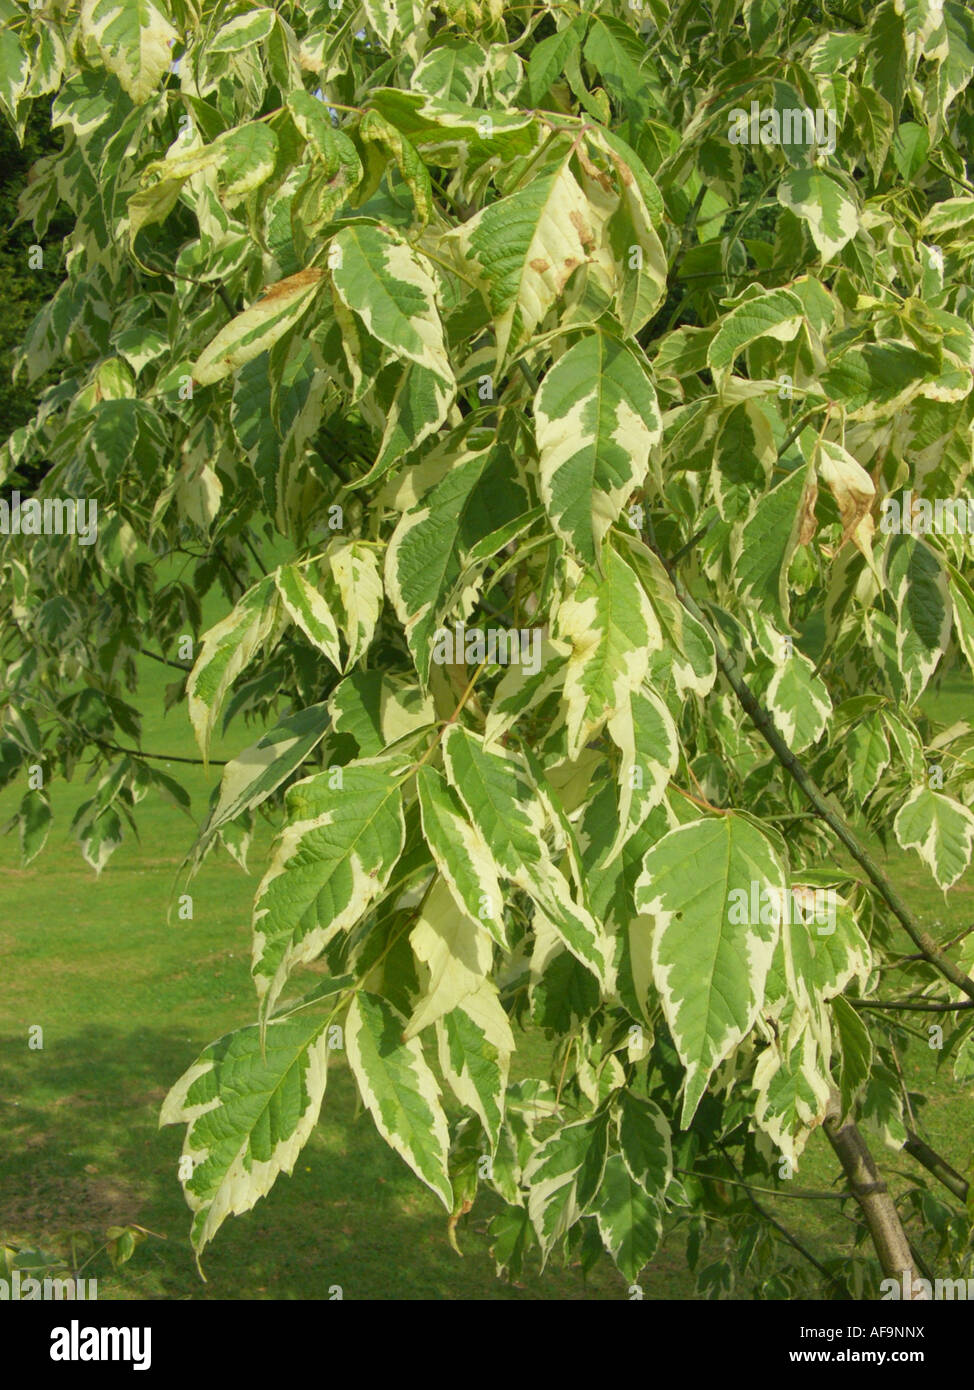 Ashleaf maple, Box elder, Silver ashleaf maple (Acer negundo 'Variegatum', Acer negundo Variegatum), detail of the leaves Stock Photo